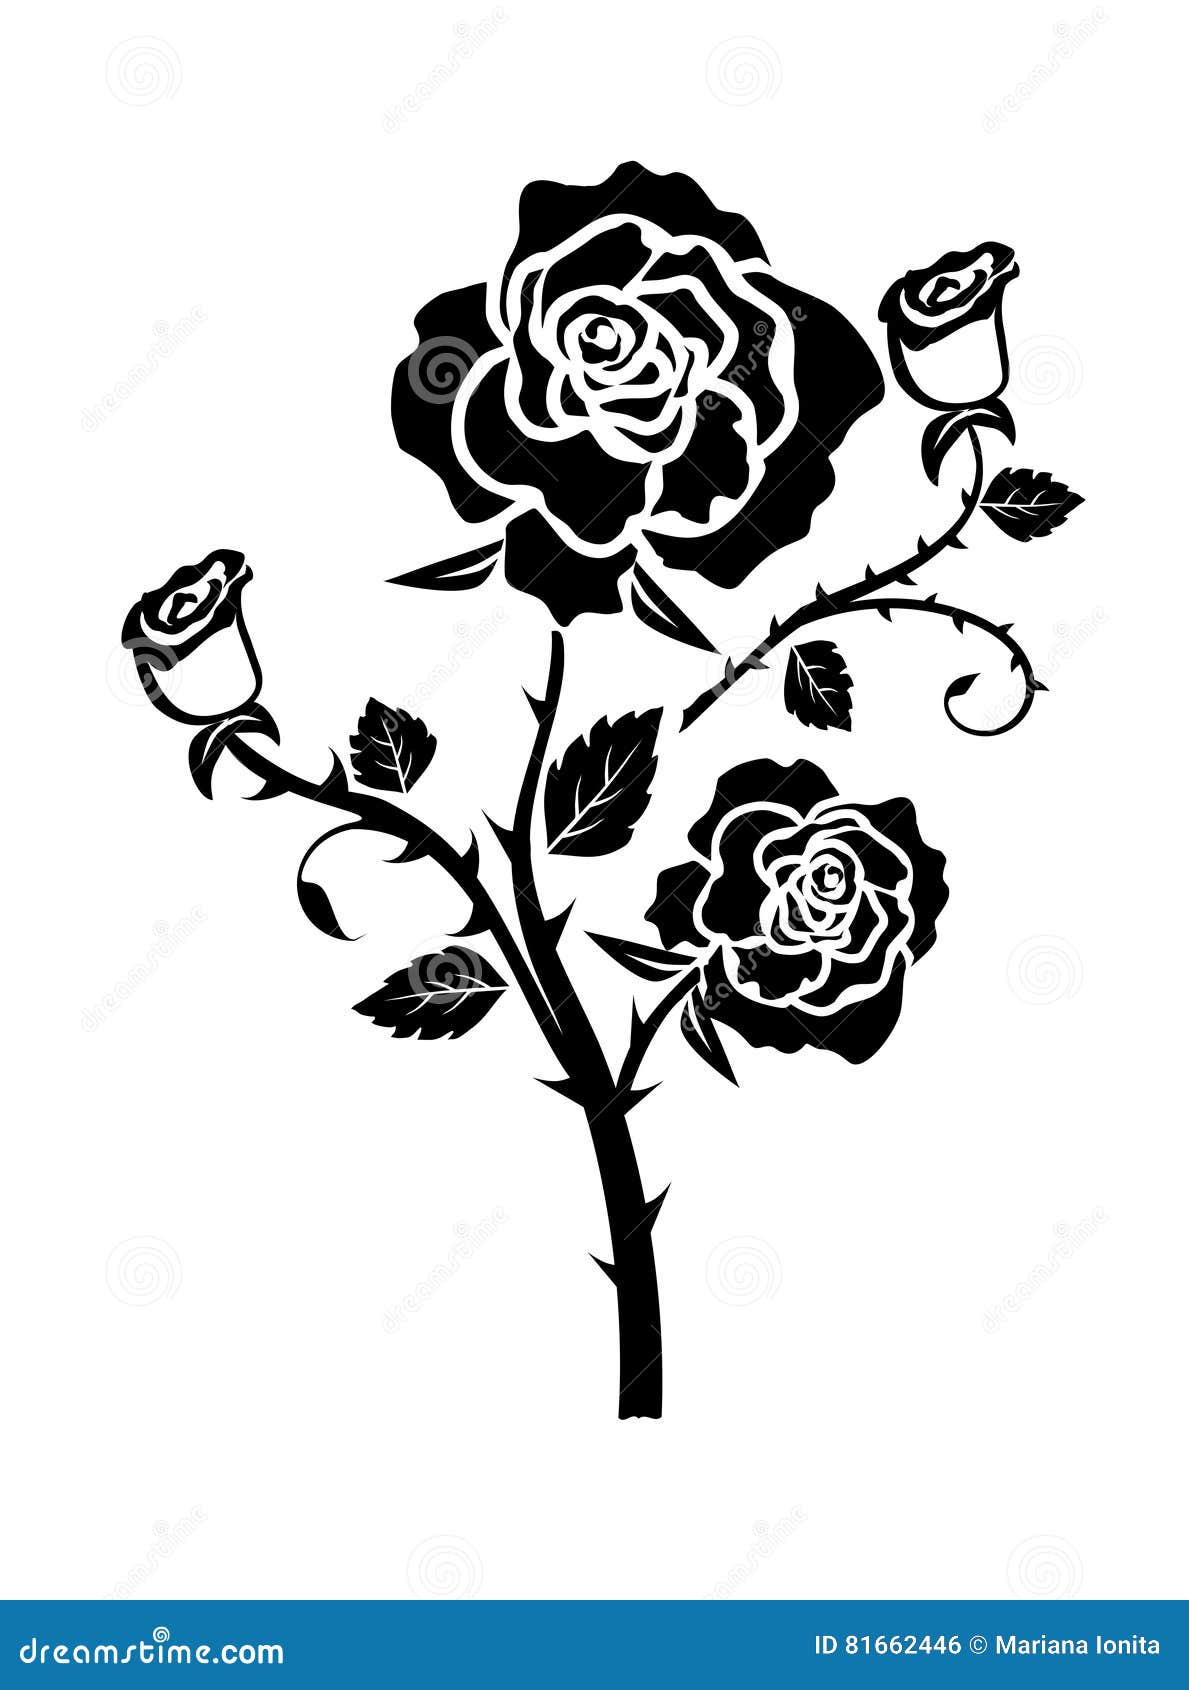 Rose illustration stock vector. Illustration of buds - 81662446